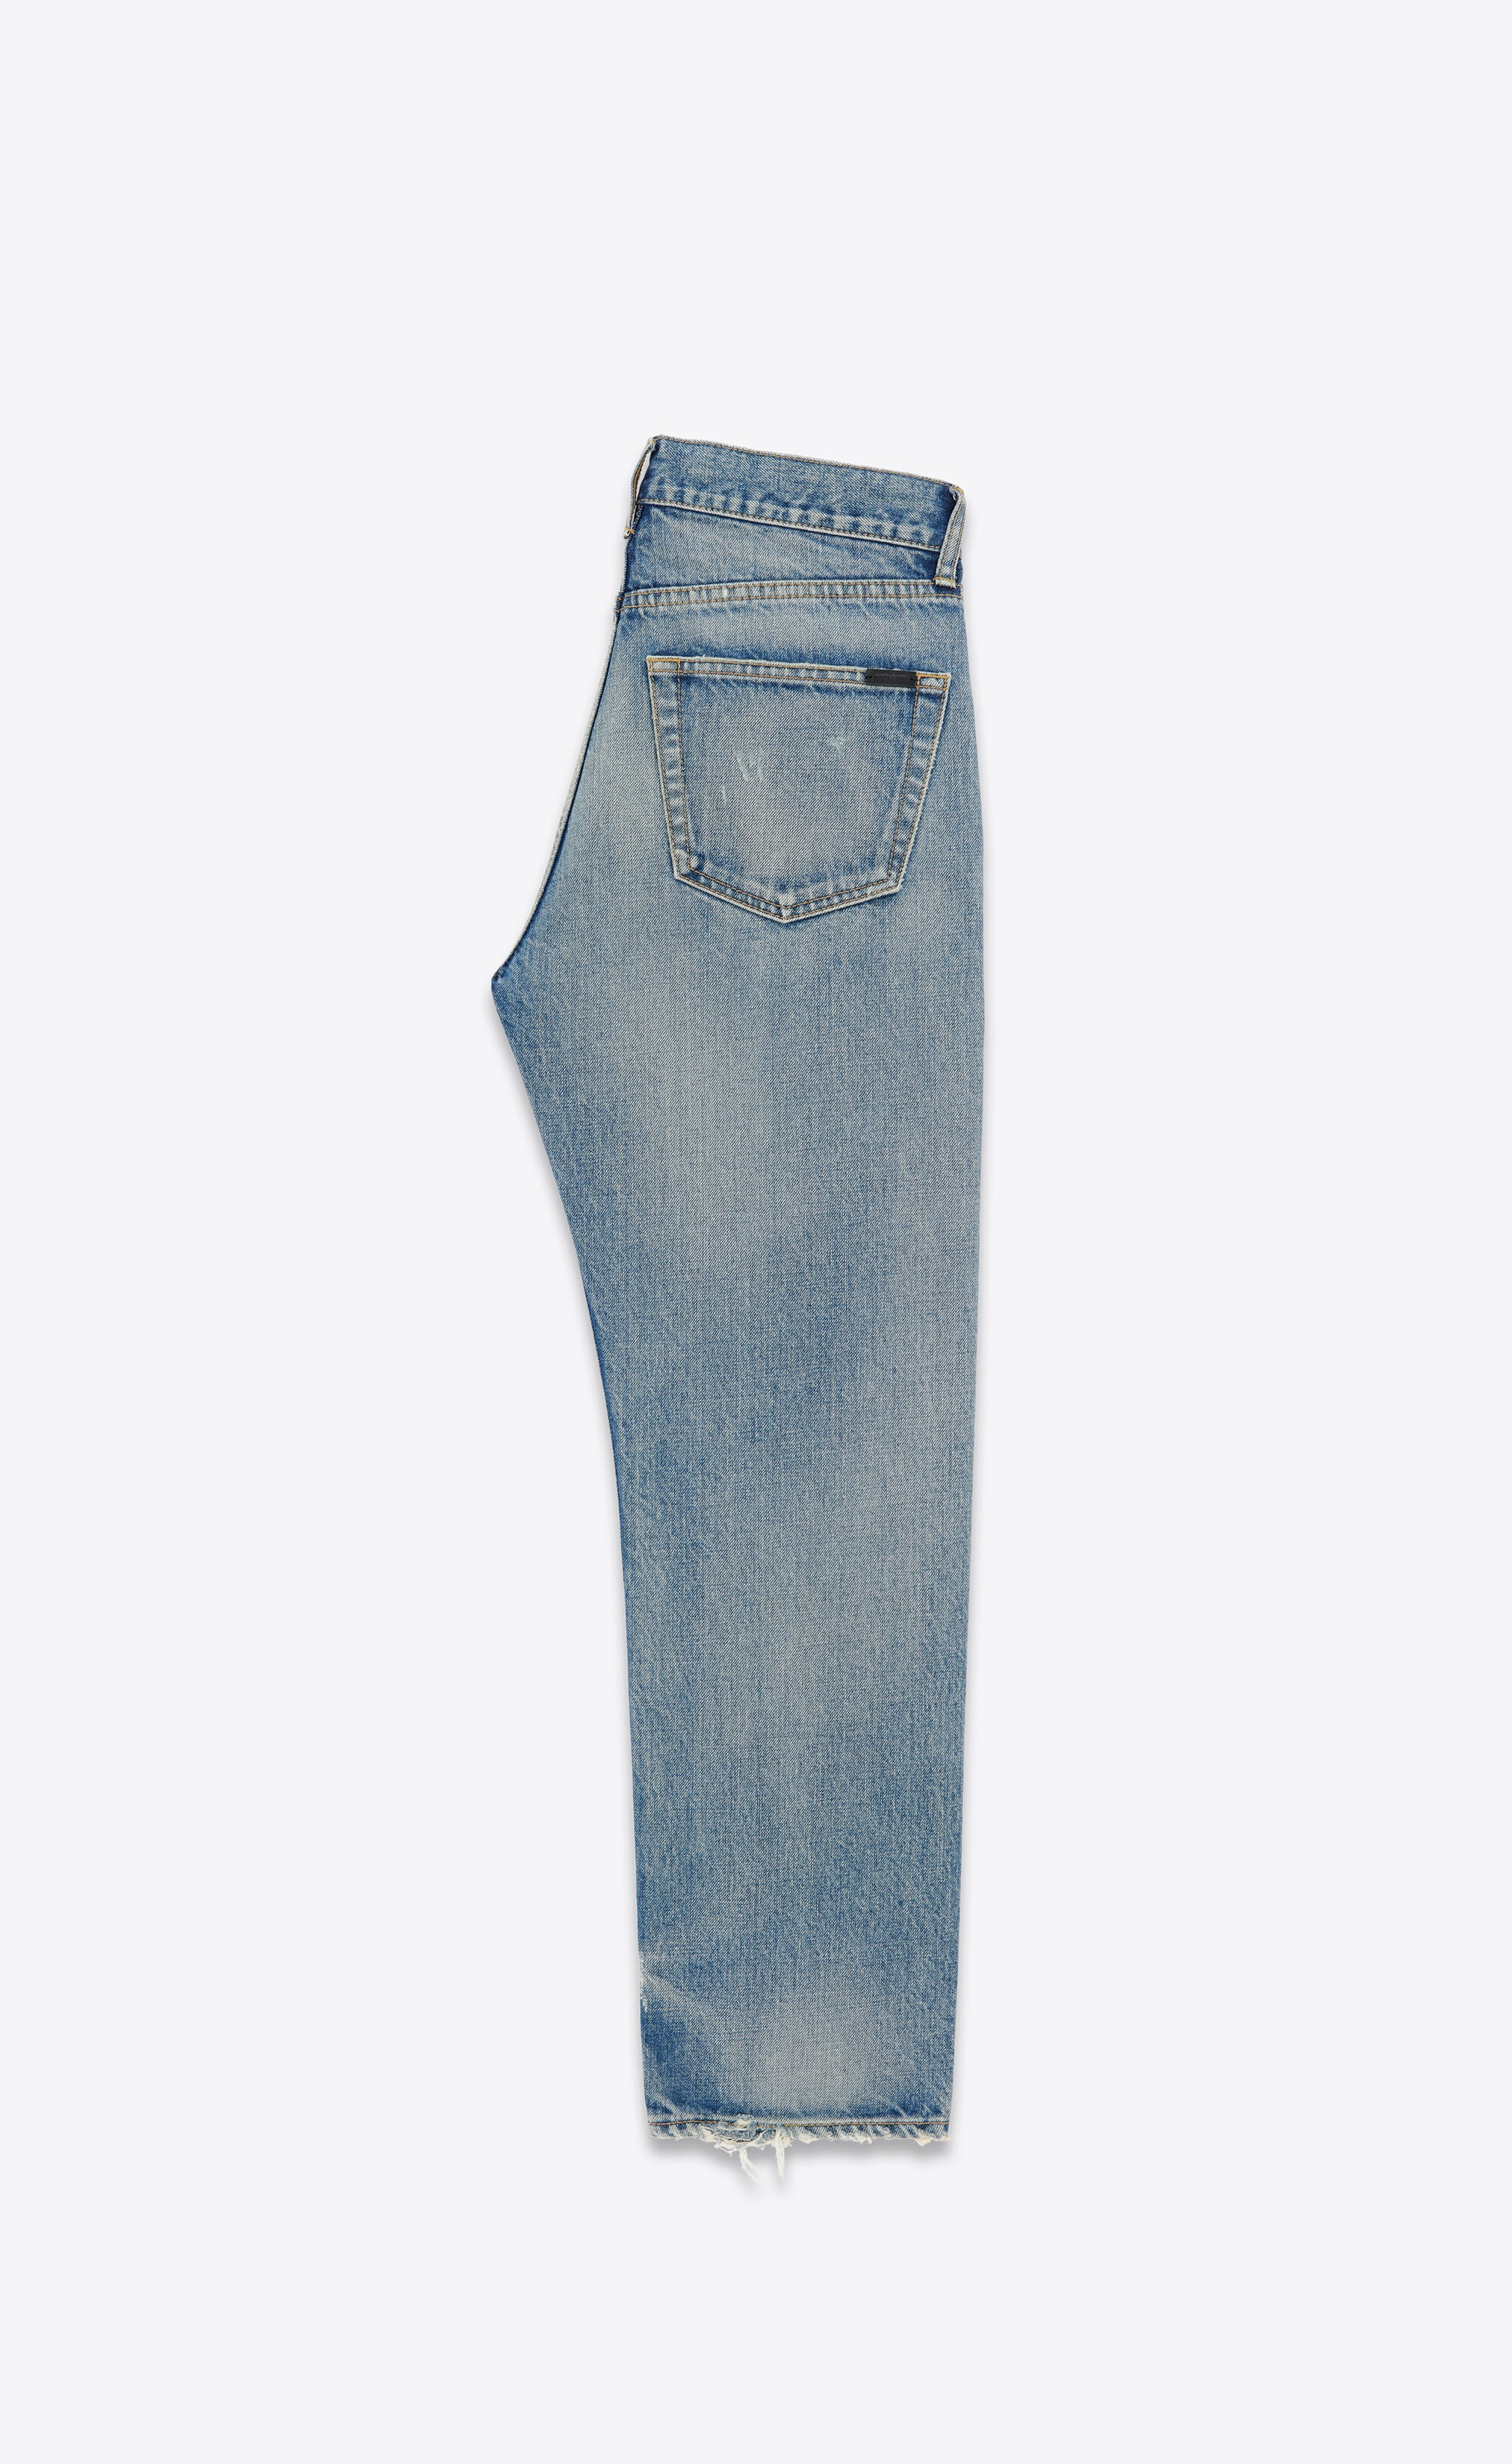 mick jeans in charlotte blue denim - 2